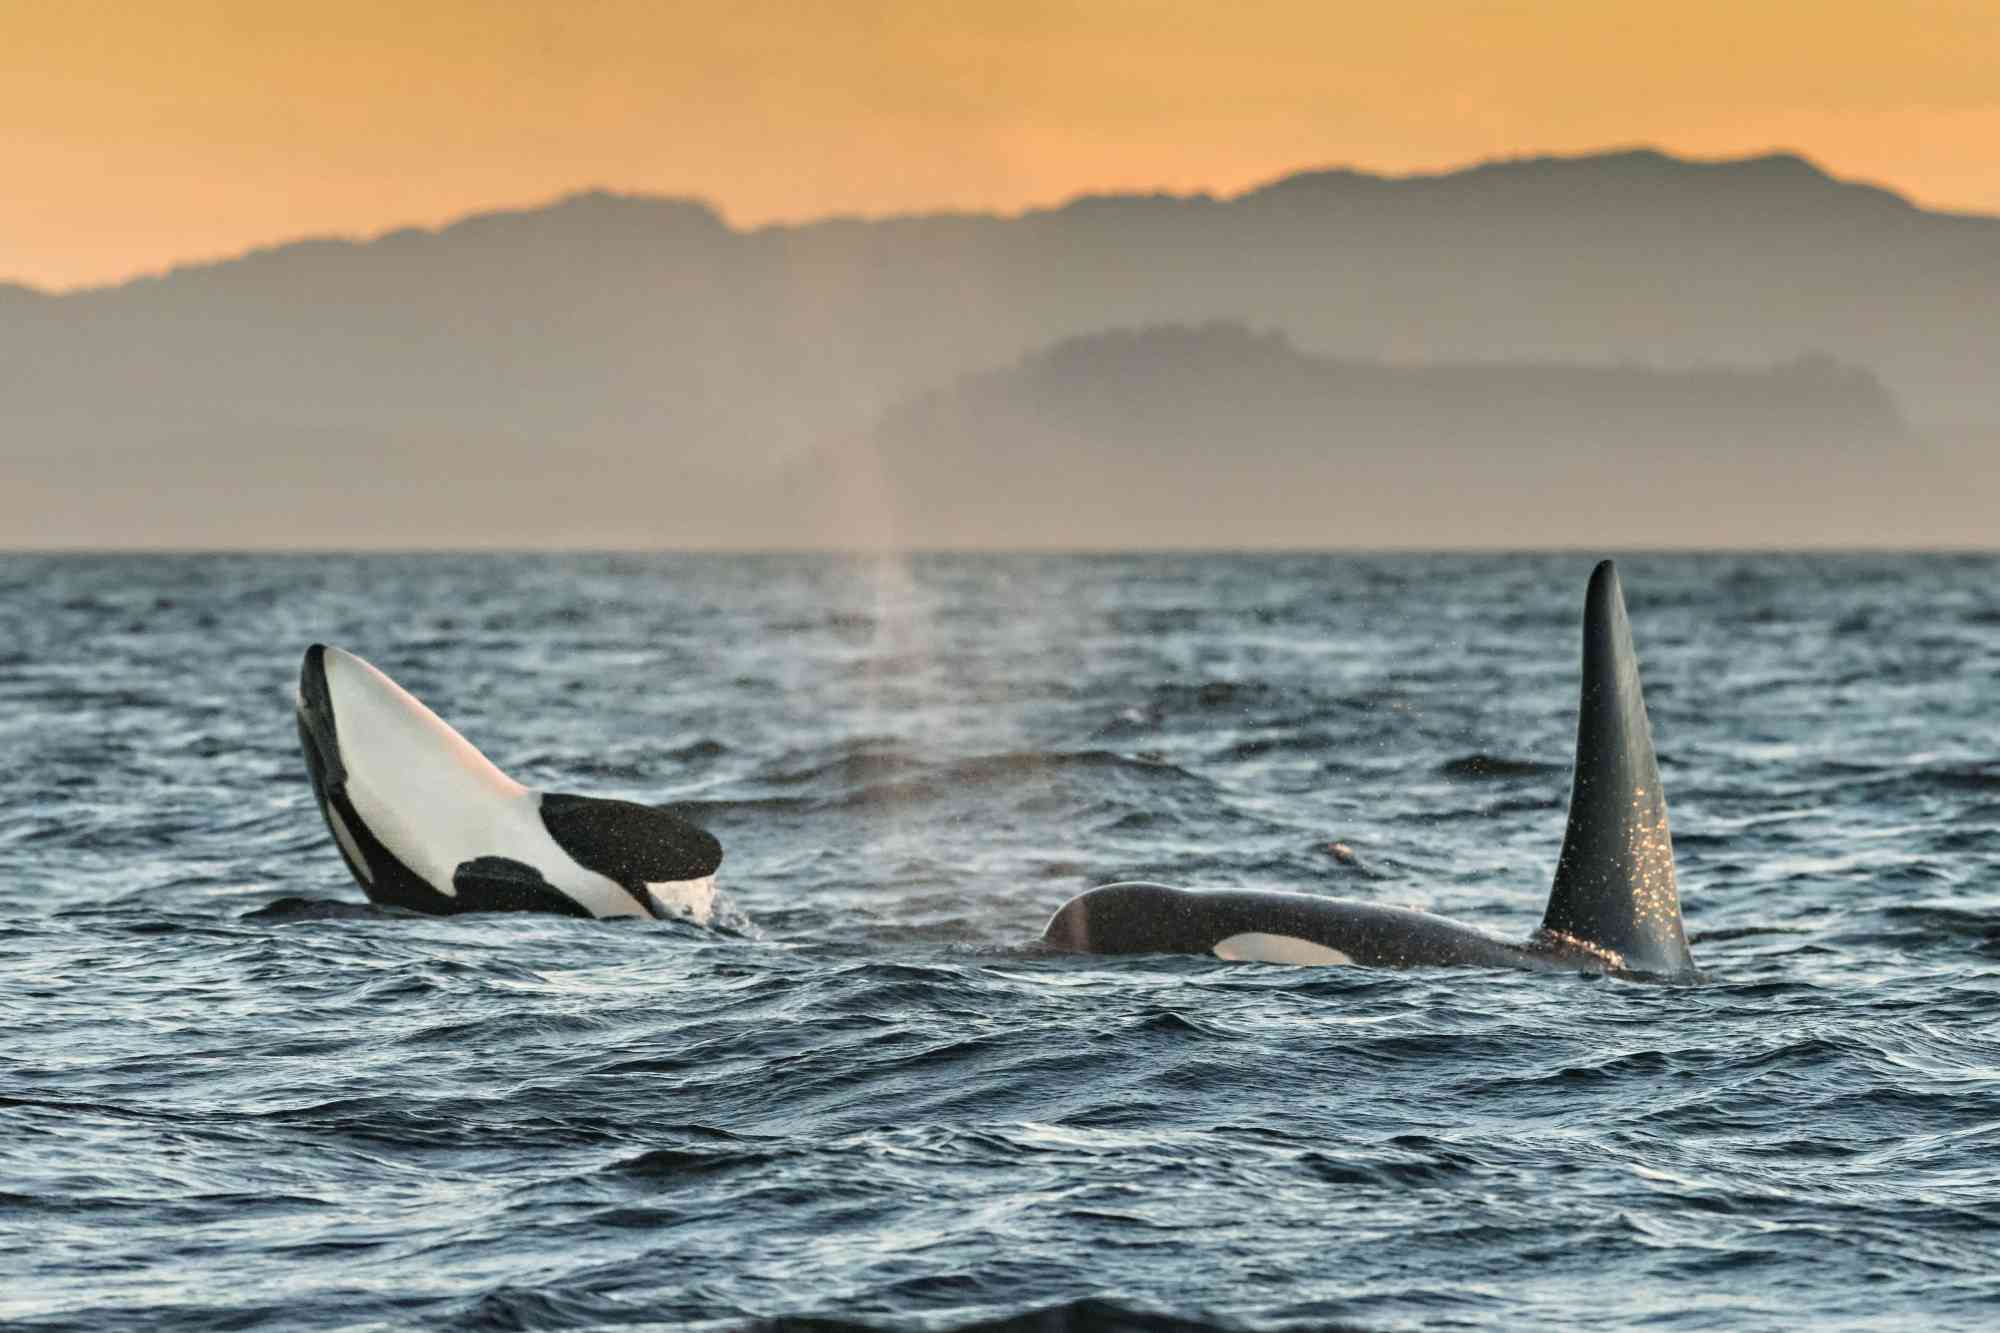 2018.08.04 - Southern Resident Orcas play in Salish Sea - British Columbia, Canada - Richard Ellis - Alamy Stock Photo